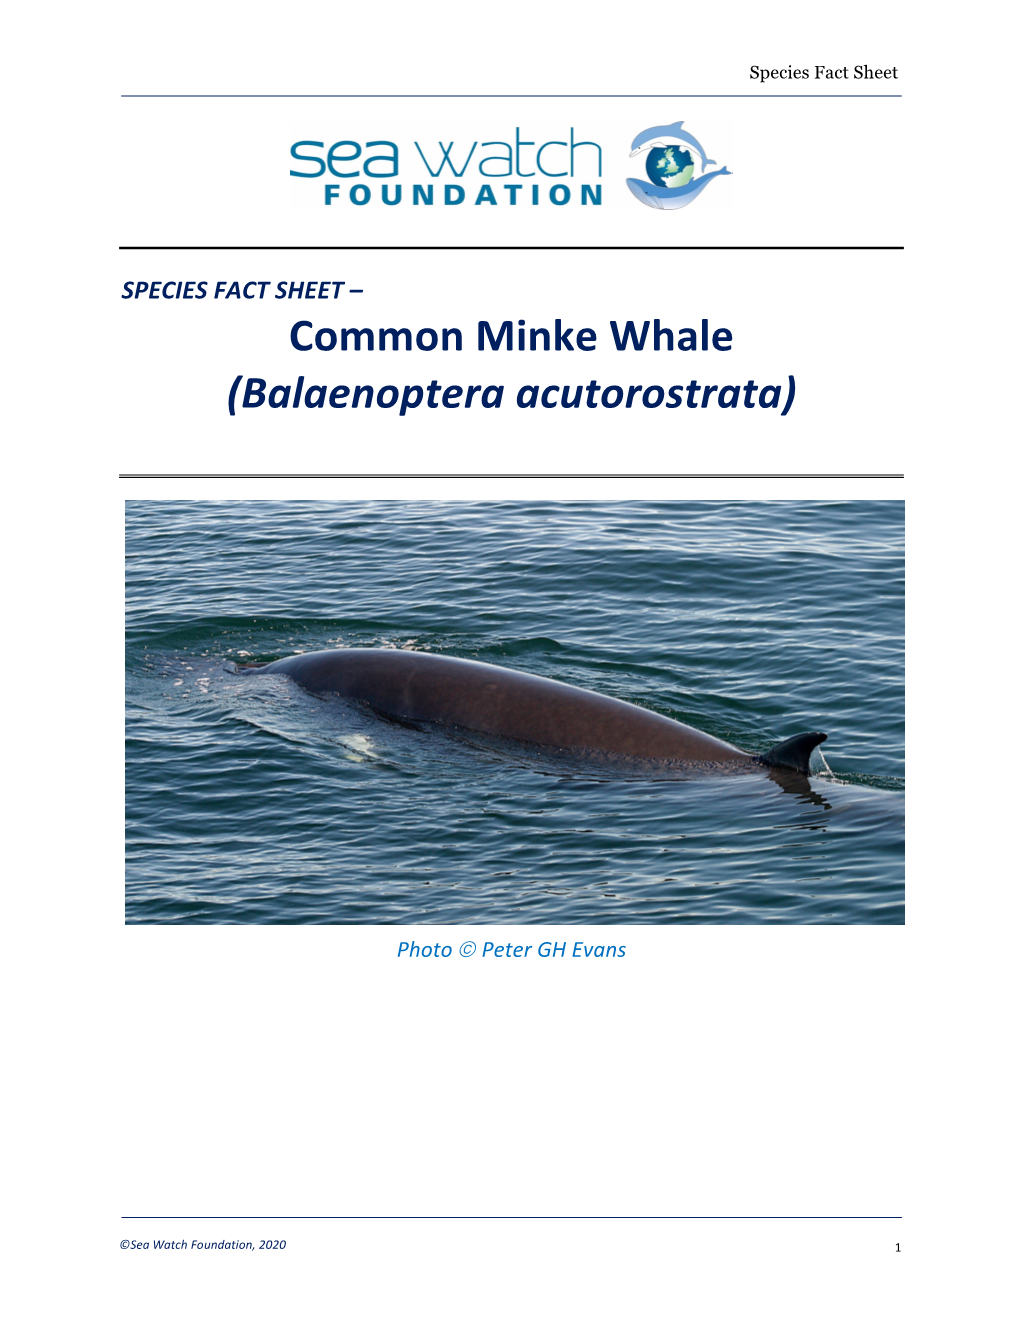 Common Minke Whale (Balaenoptera Acutorostrata)